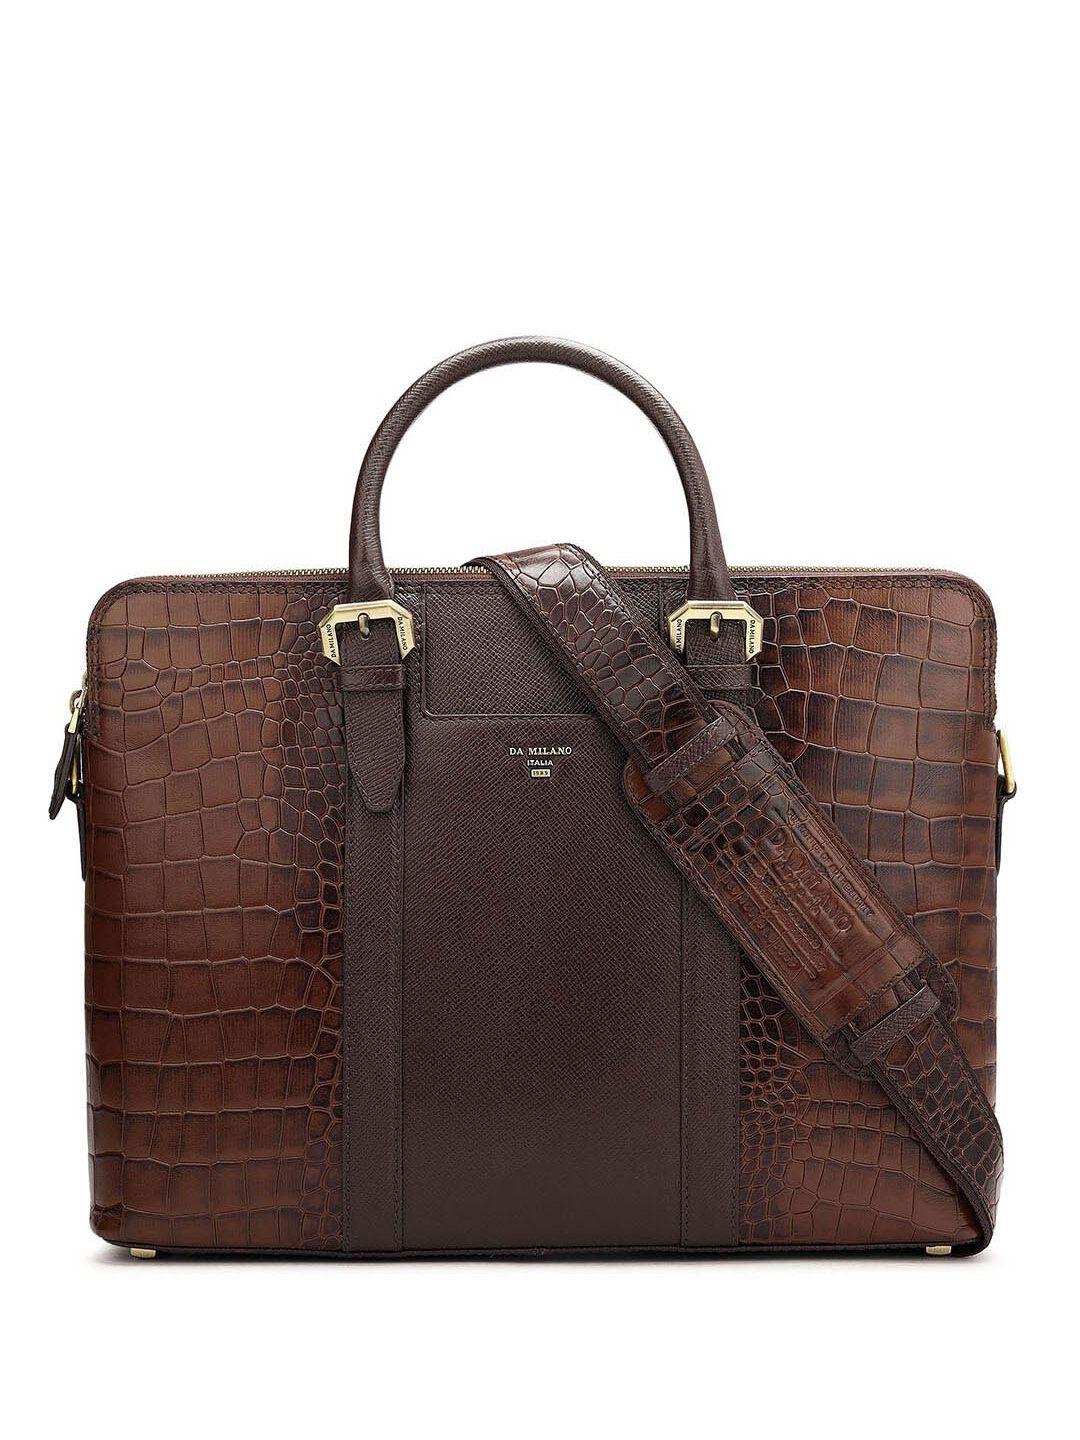 da milano unisex brown textured leather laptop bag